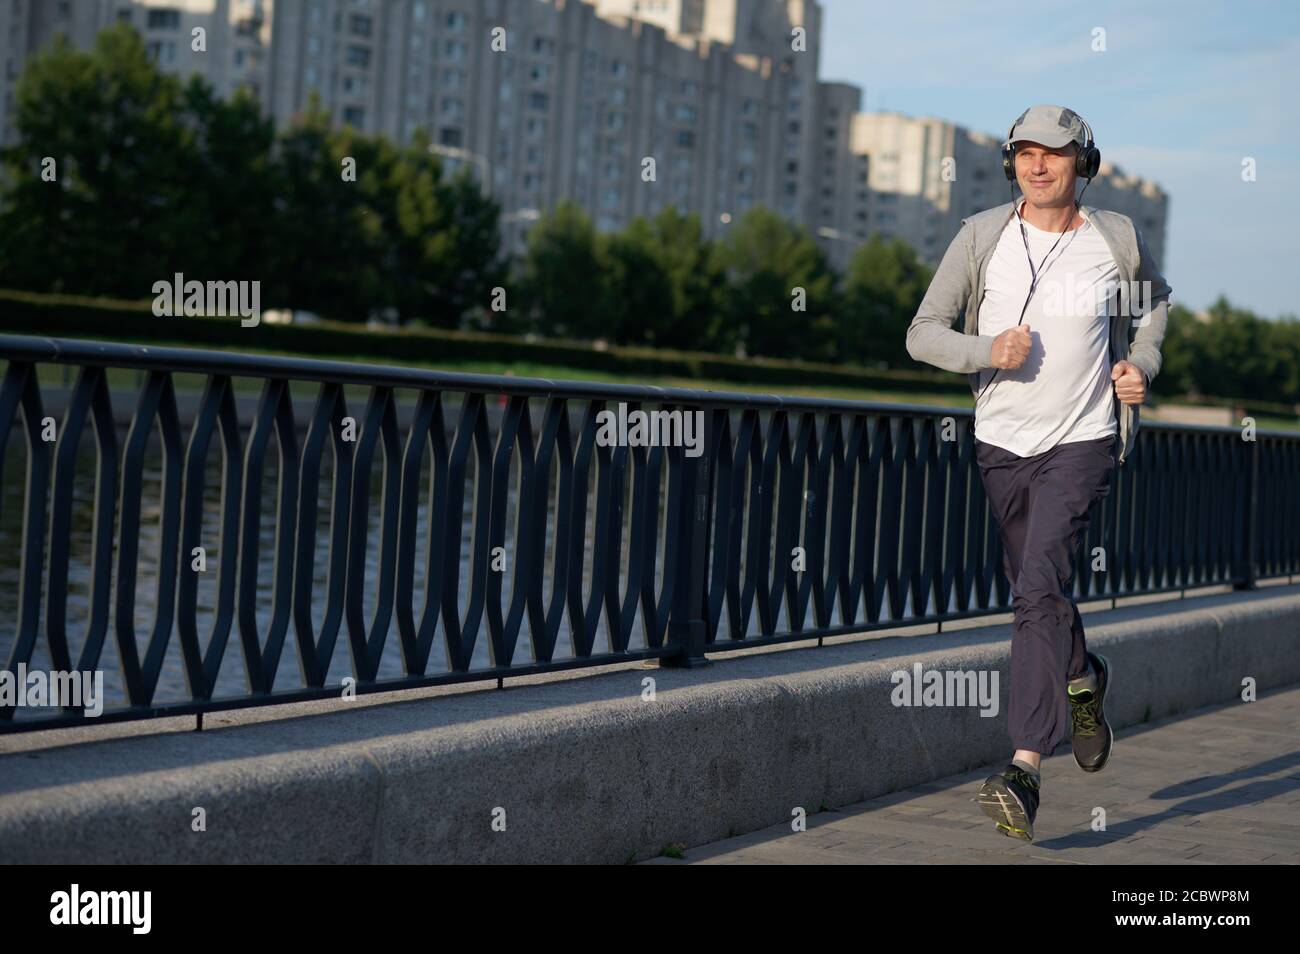 Mature Caucasian man with headphones jogging in the city Stock Photo